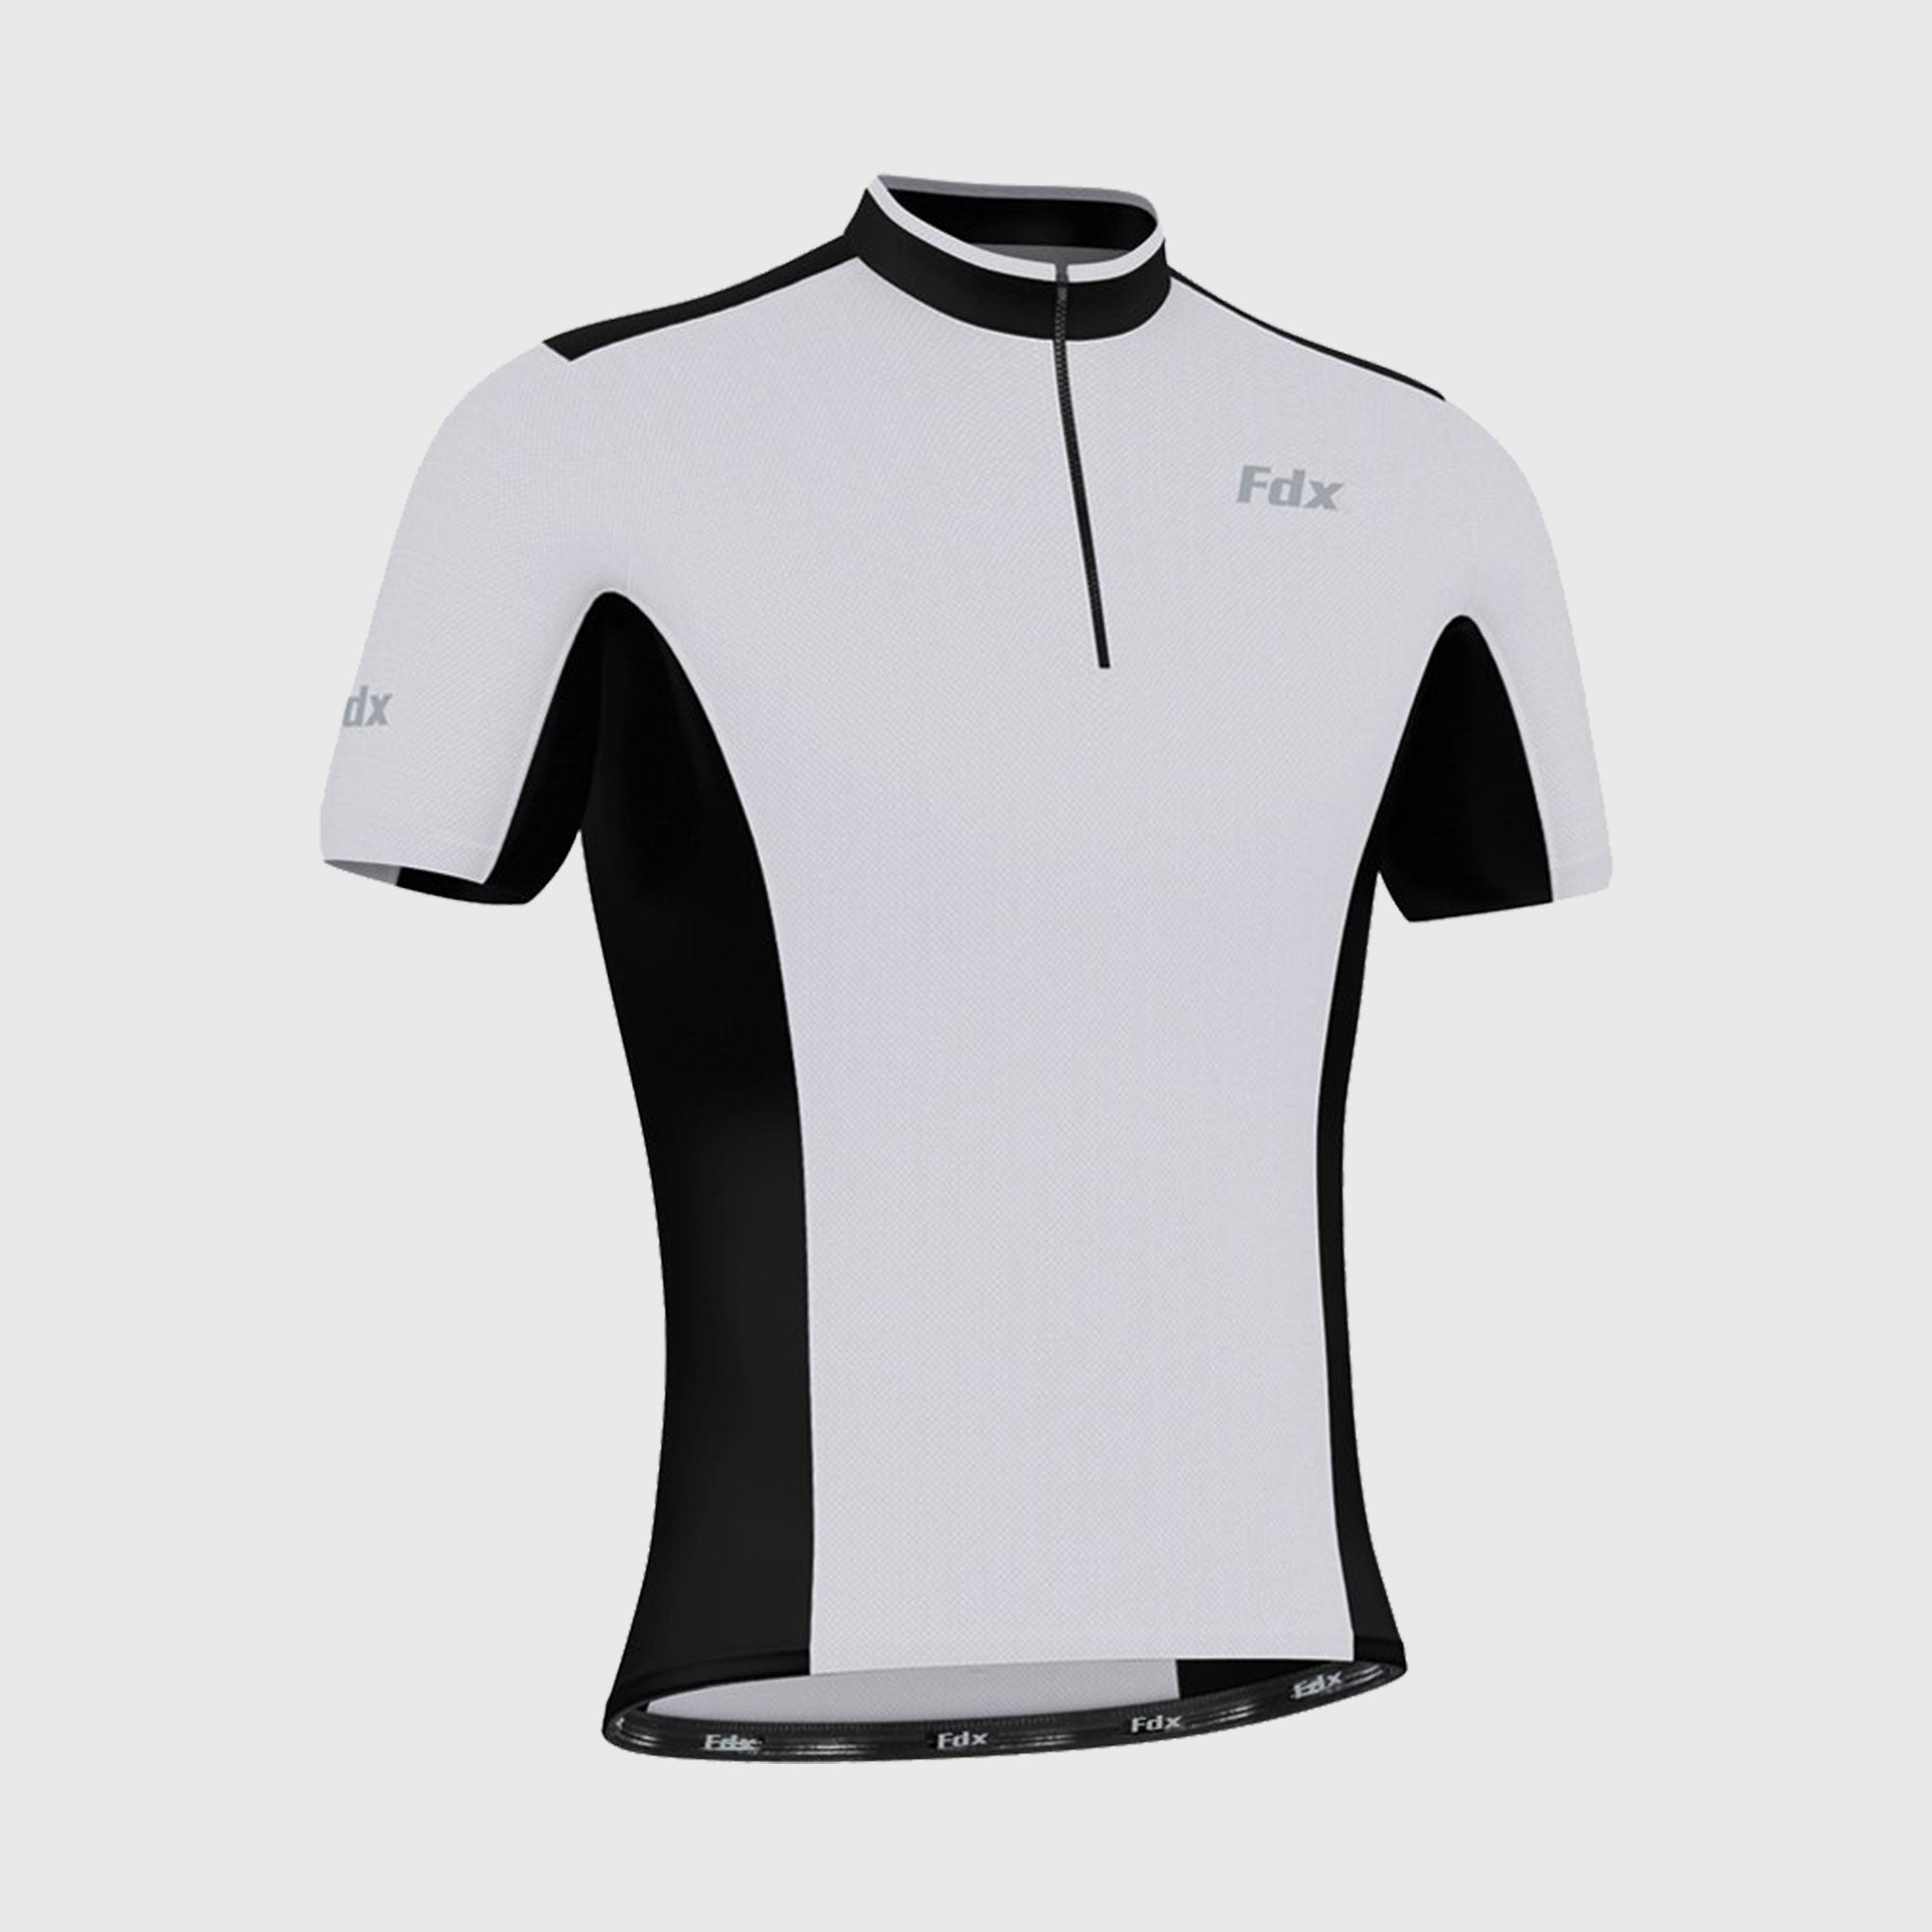 Fdx Vertex White Men's Short Sleeve Summer Cycling Jersey